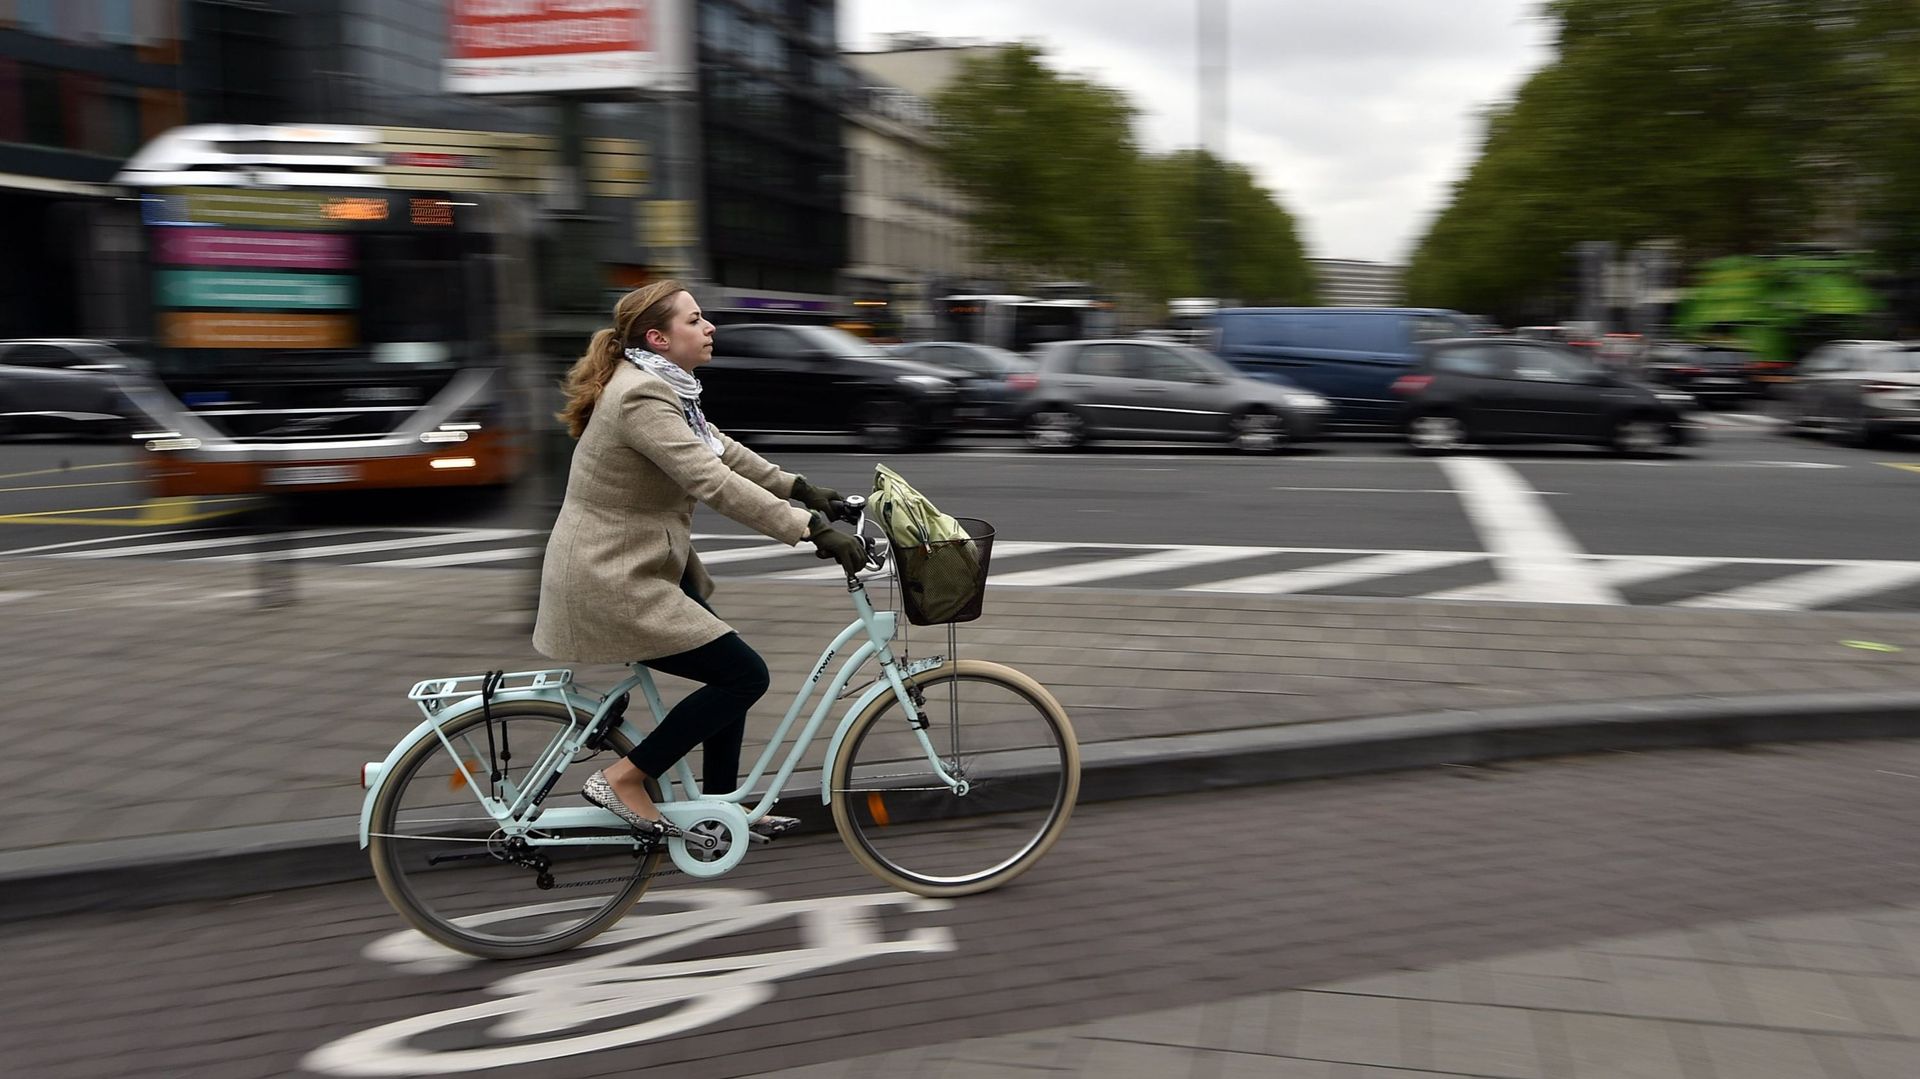 Cycliste bruxelloise dans la circulation automobile, le 03 mai 2019